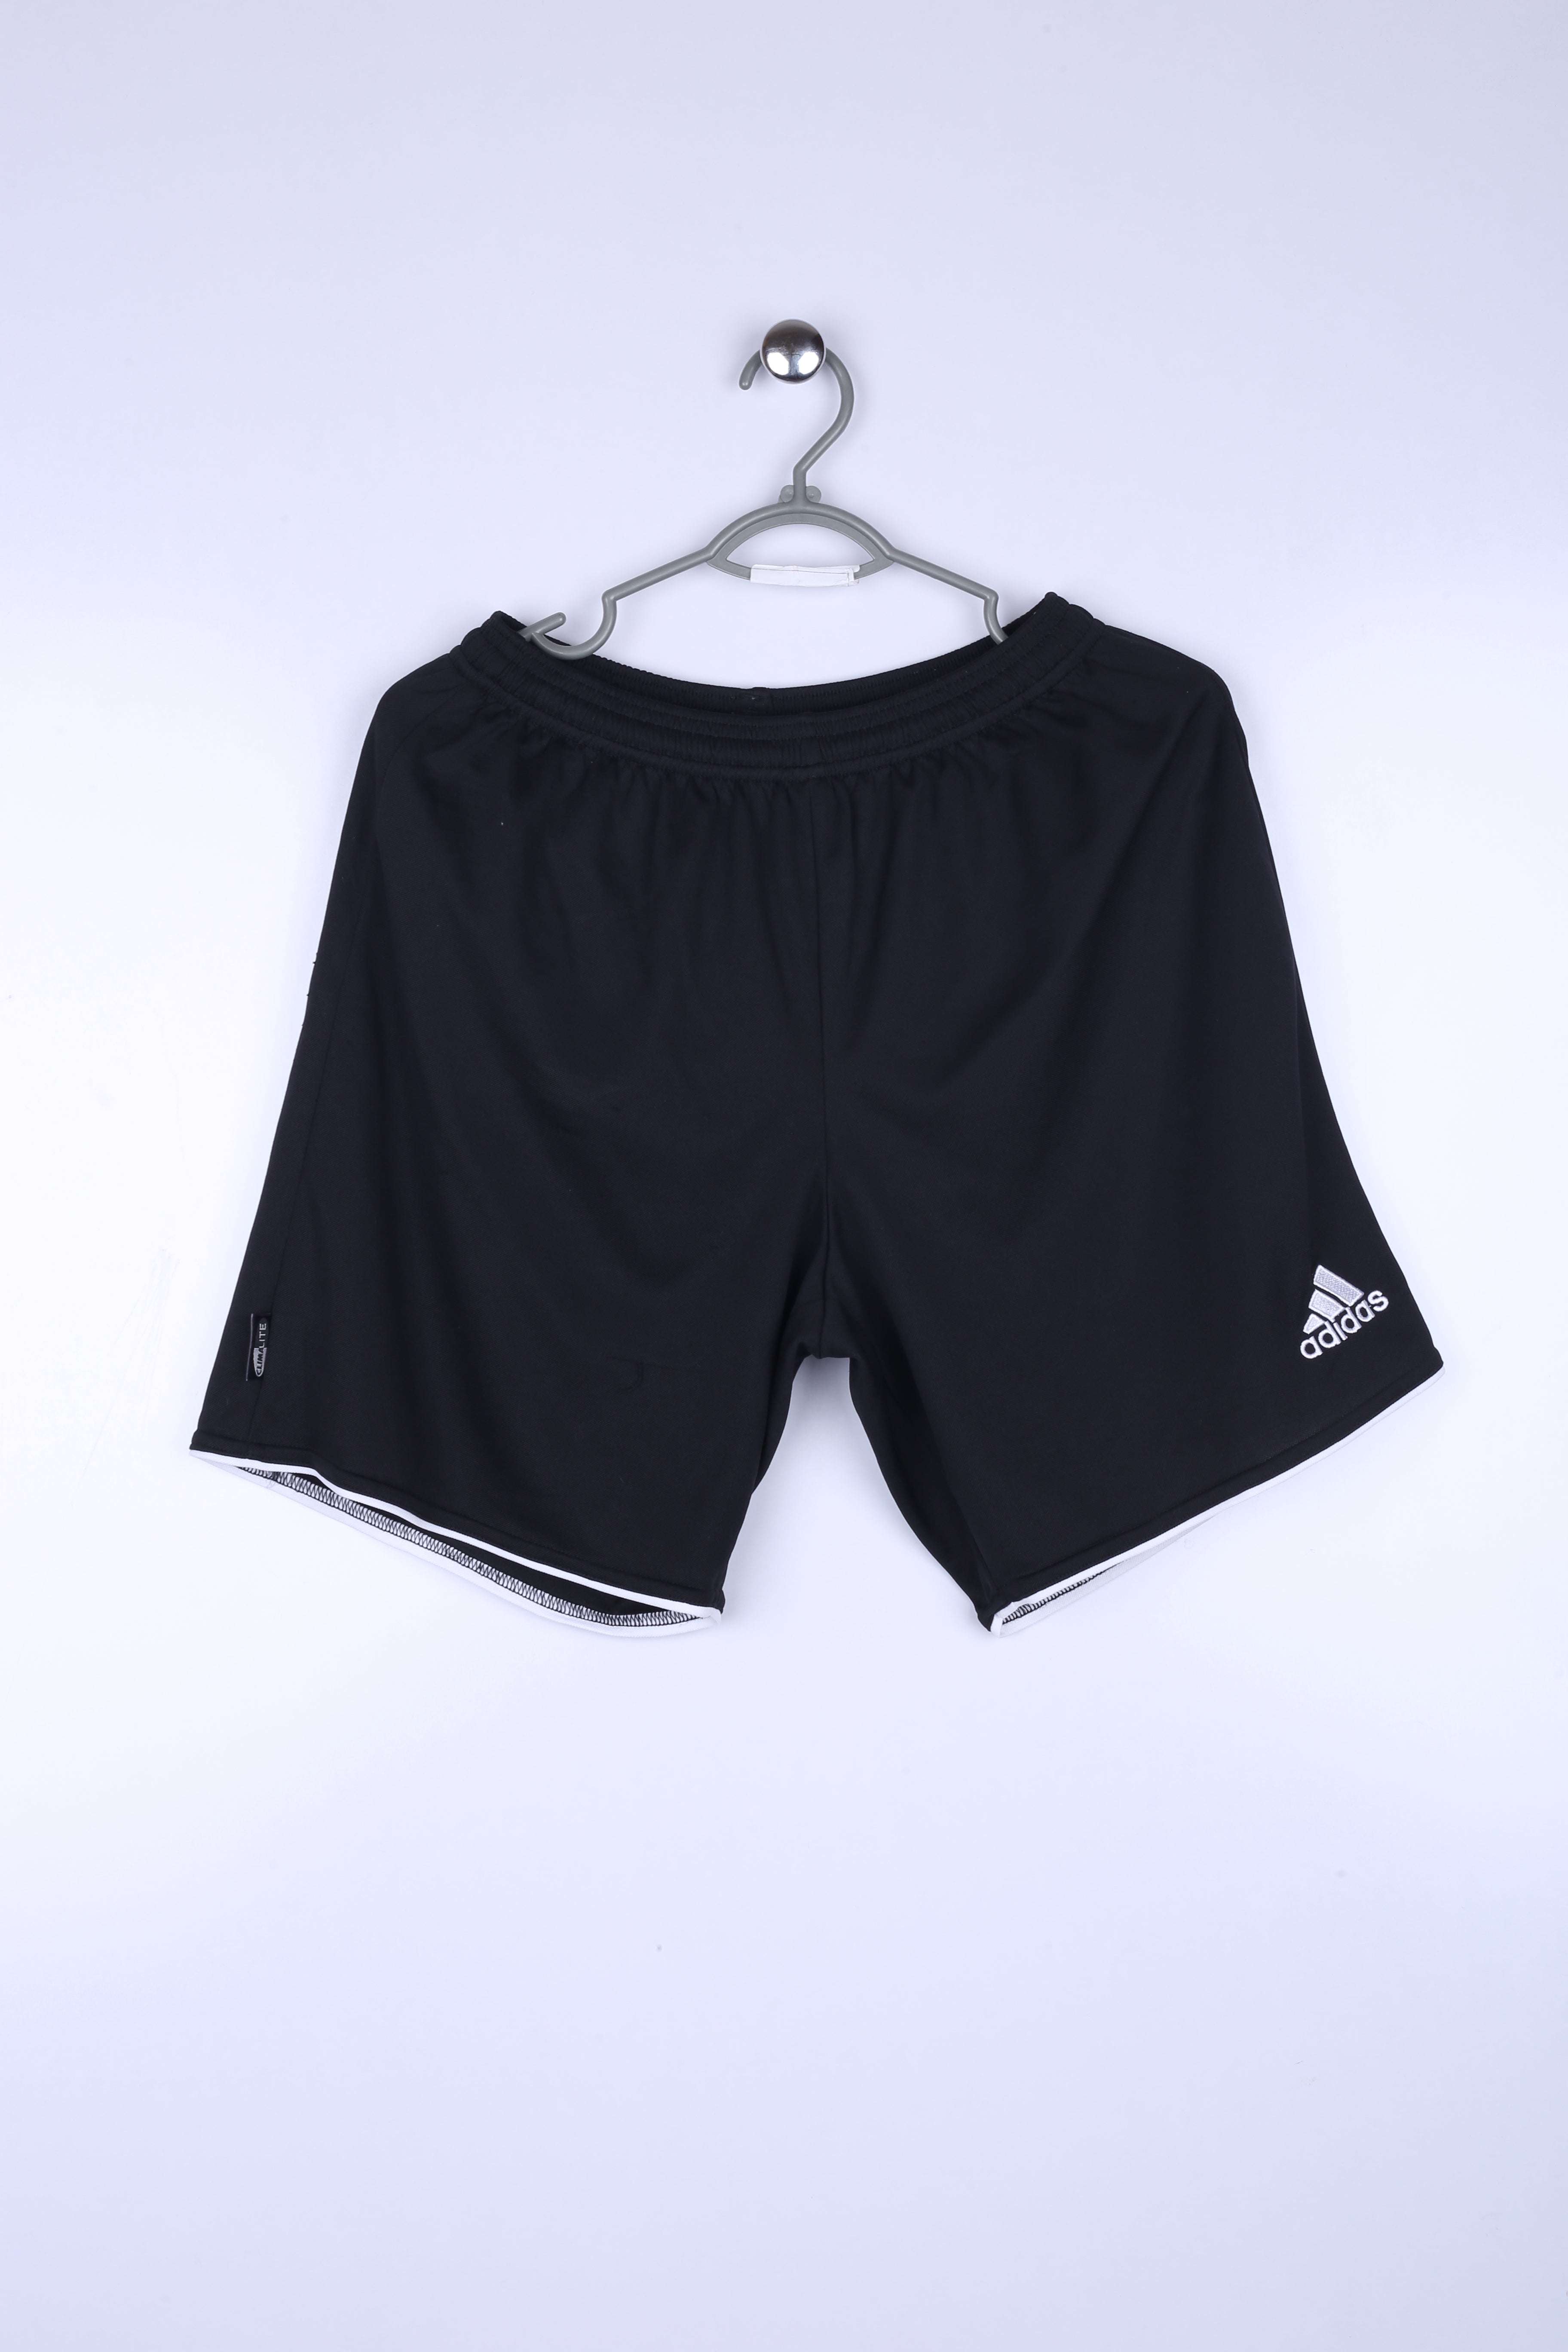 Vintage Adidas Shorts Black Small